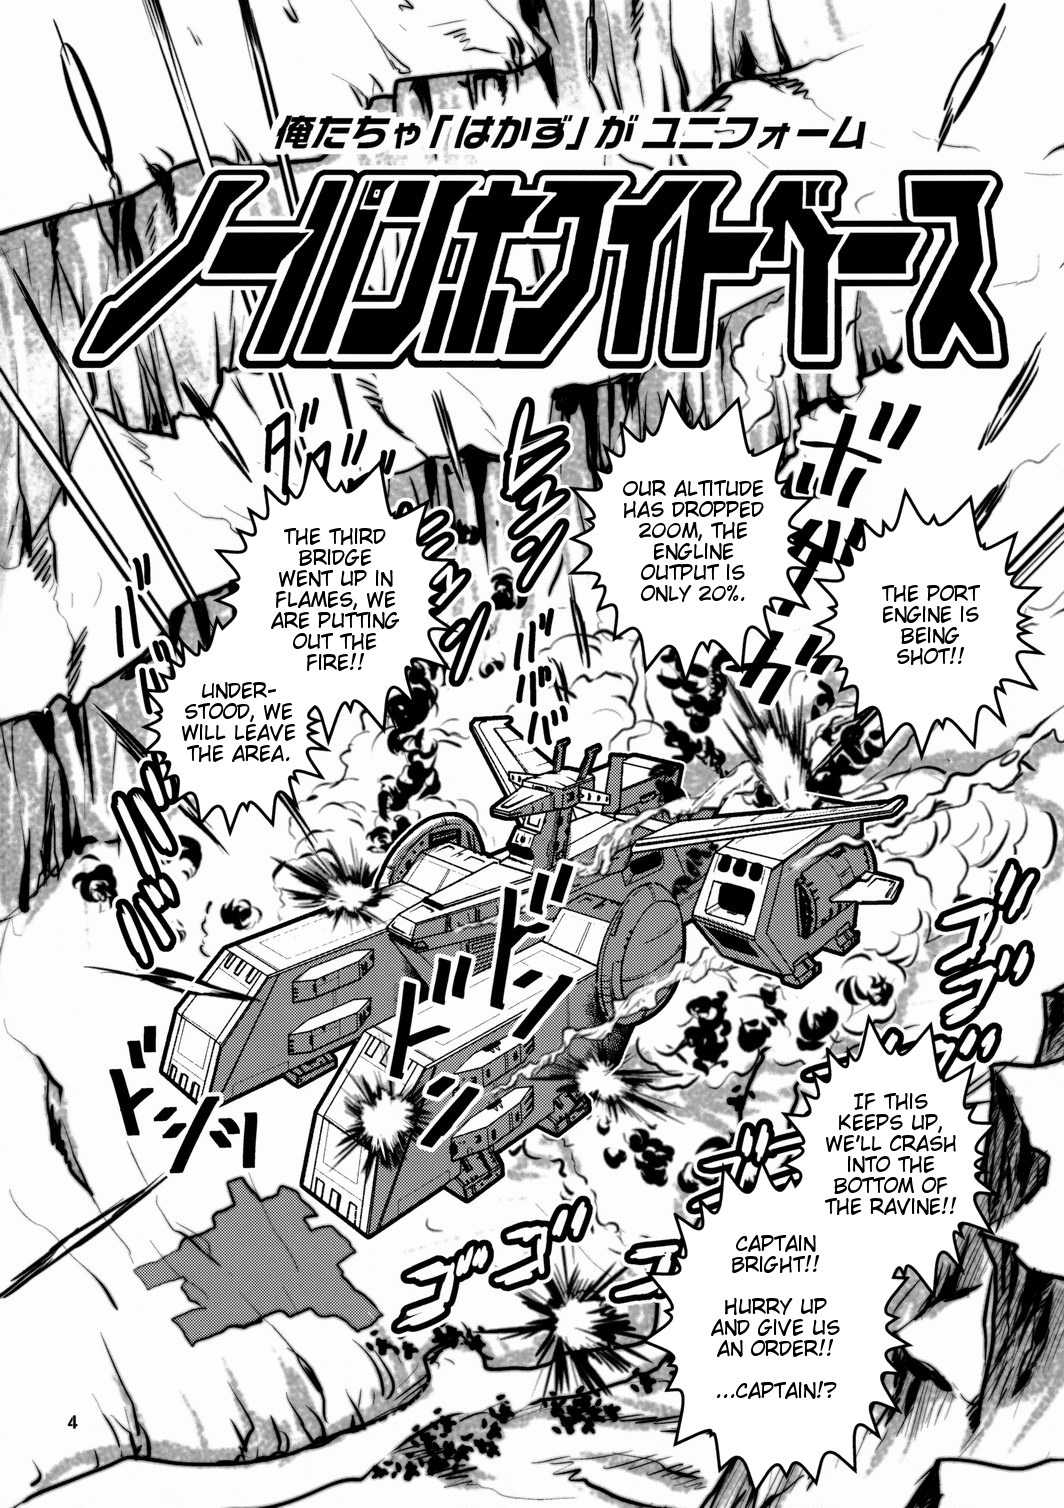 (C76)[Skirt Tuki (keso)] No Panties White Base (Mobile Suit Gundam)[English][RedComet] (C76)[スカートつき (keso)] ノーパンホワイトベース (ガンダム)[英語][赤い彗星]